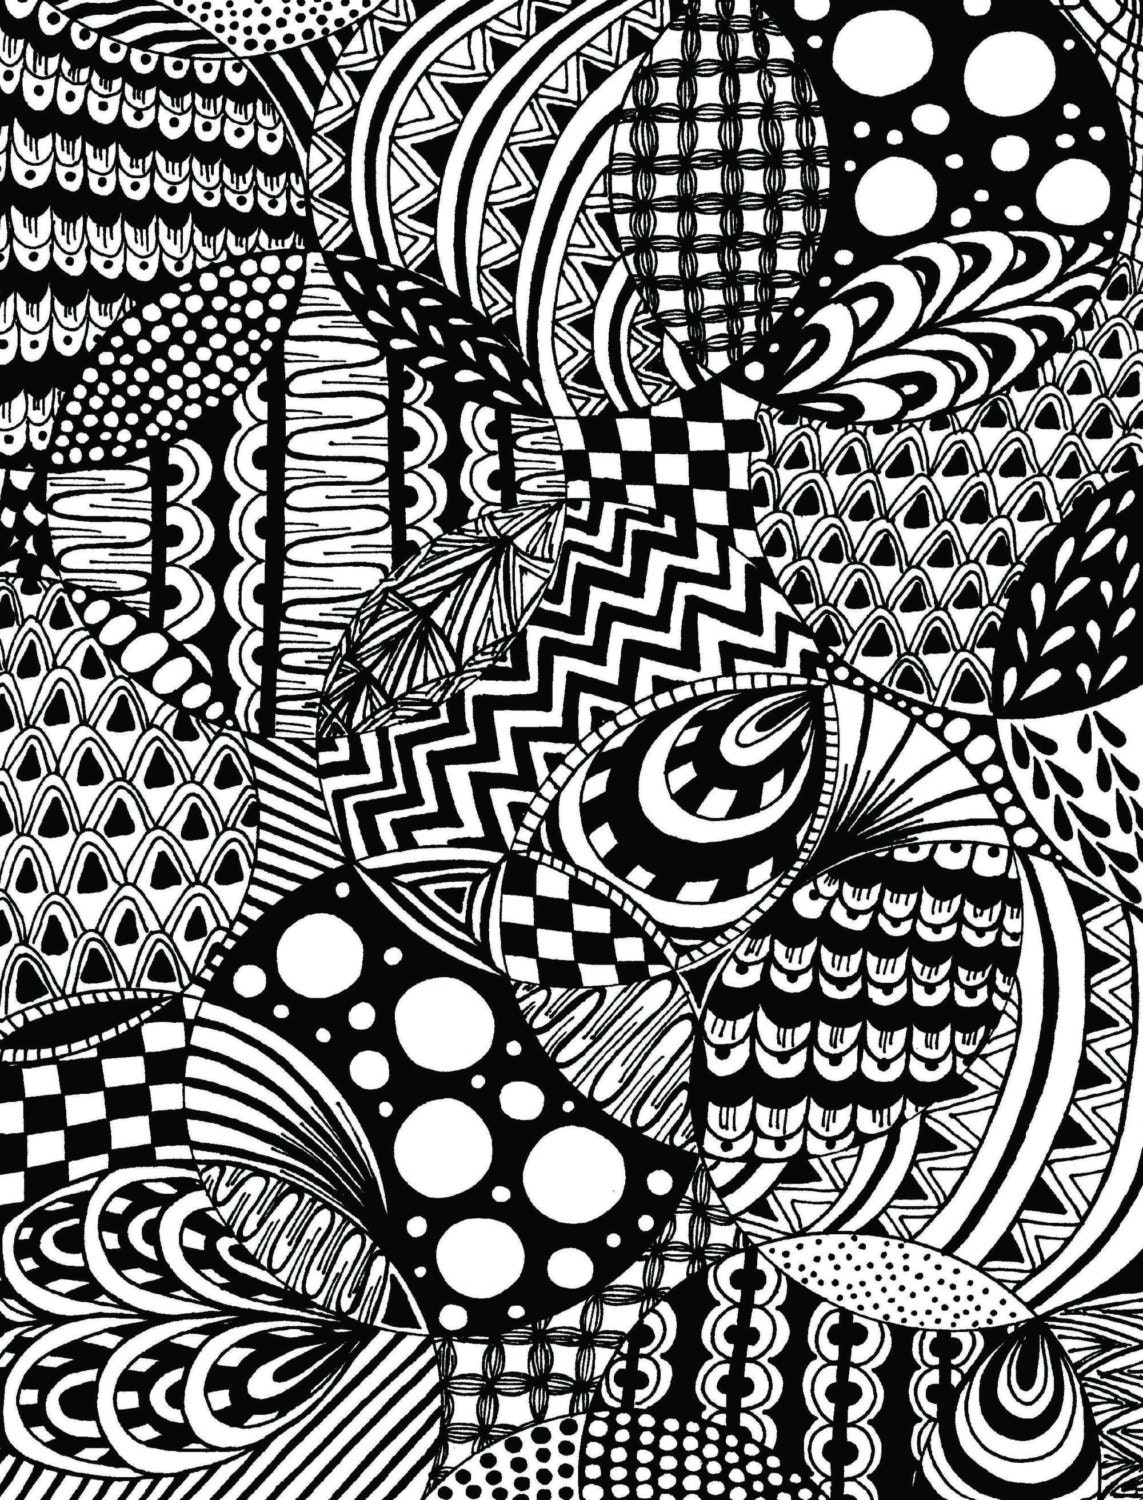 9x12 Zentangle Circular Pattern Art Print Doodle by eeveesartwork